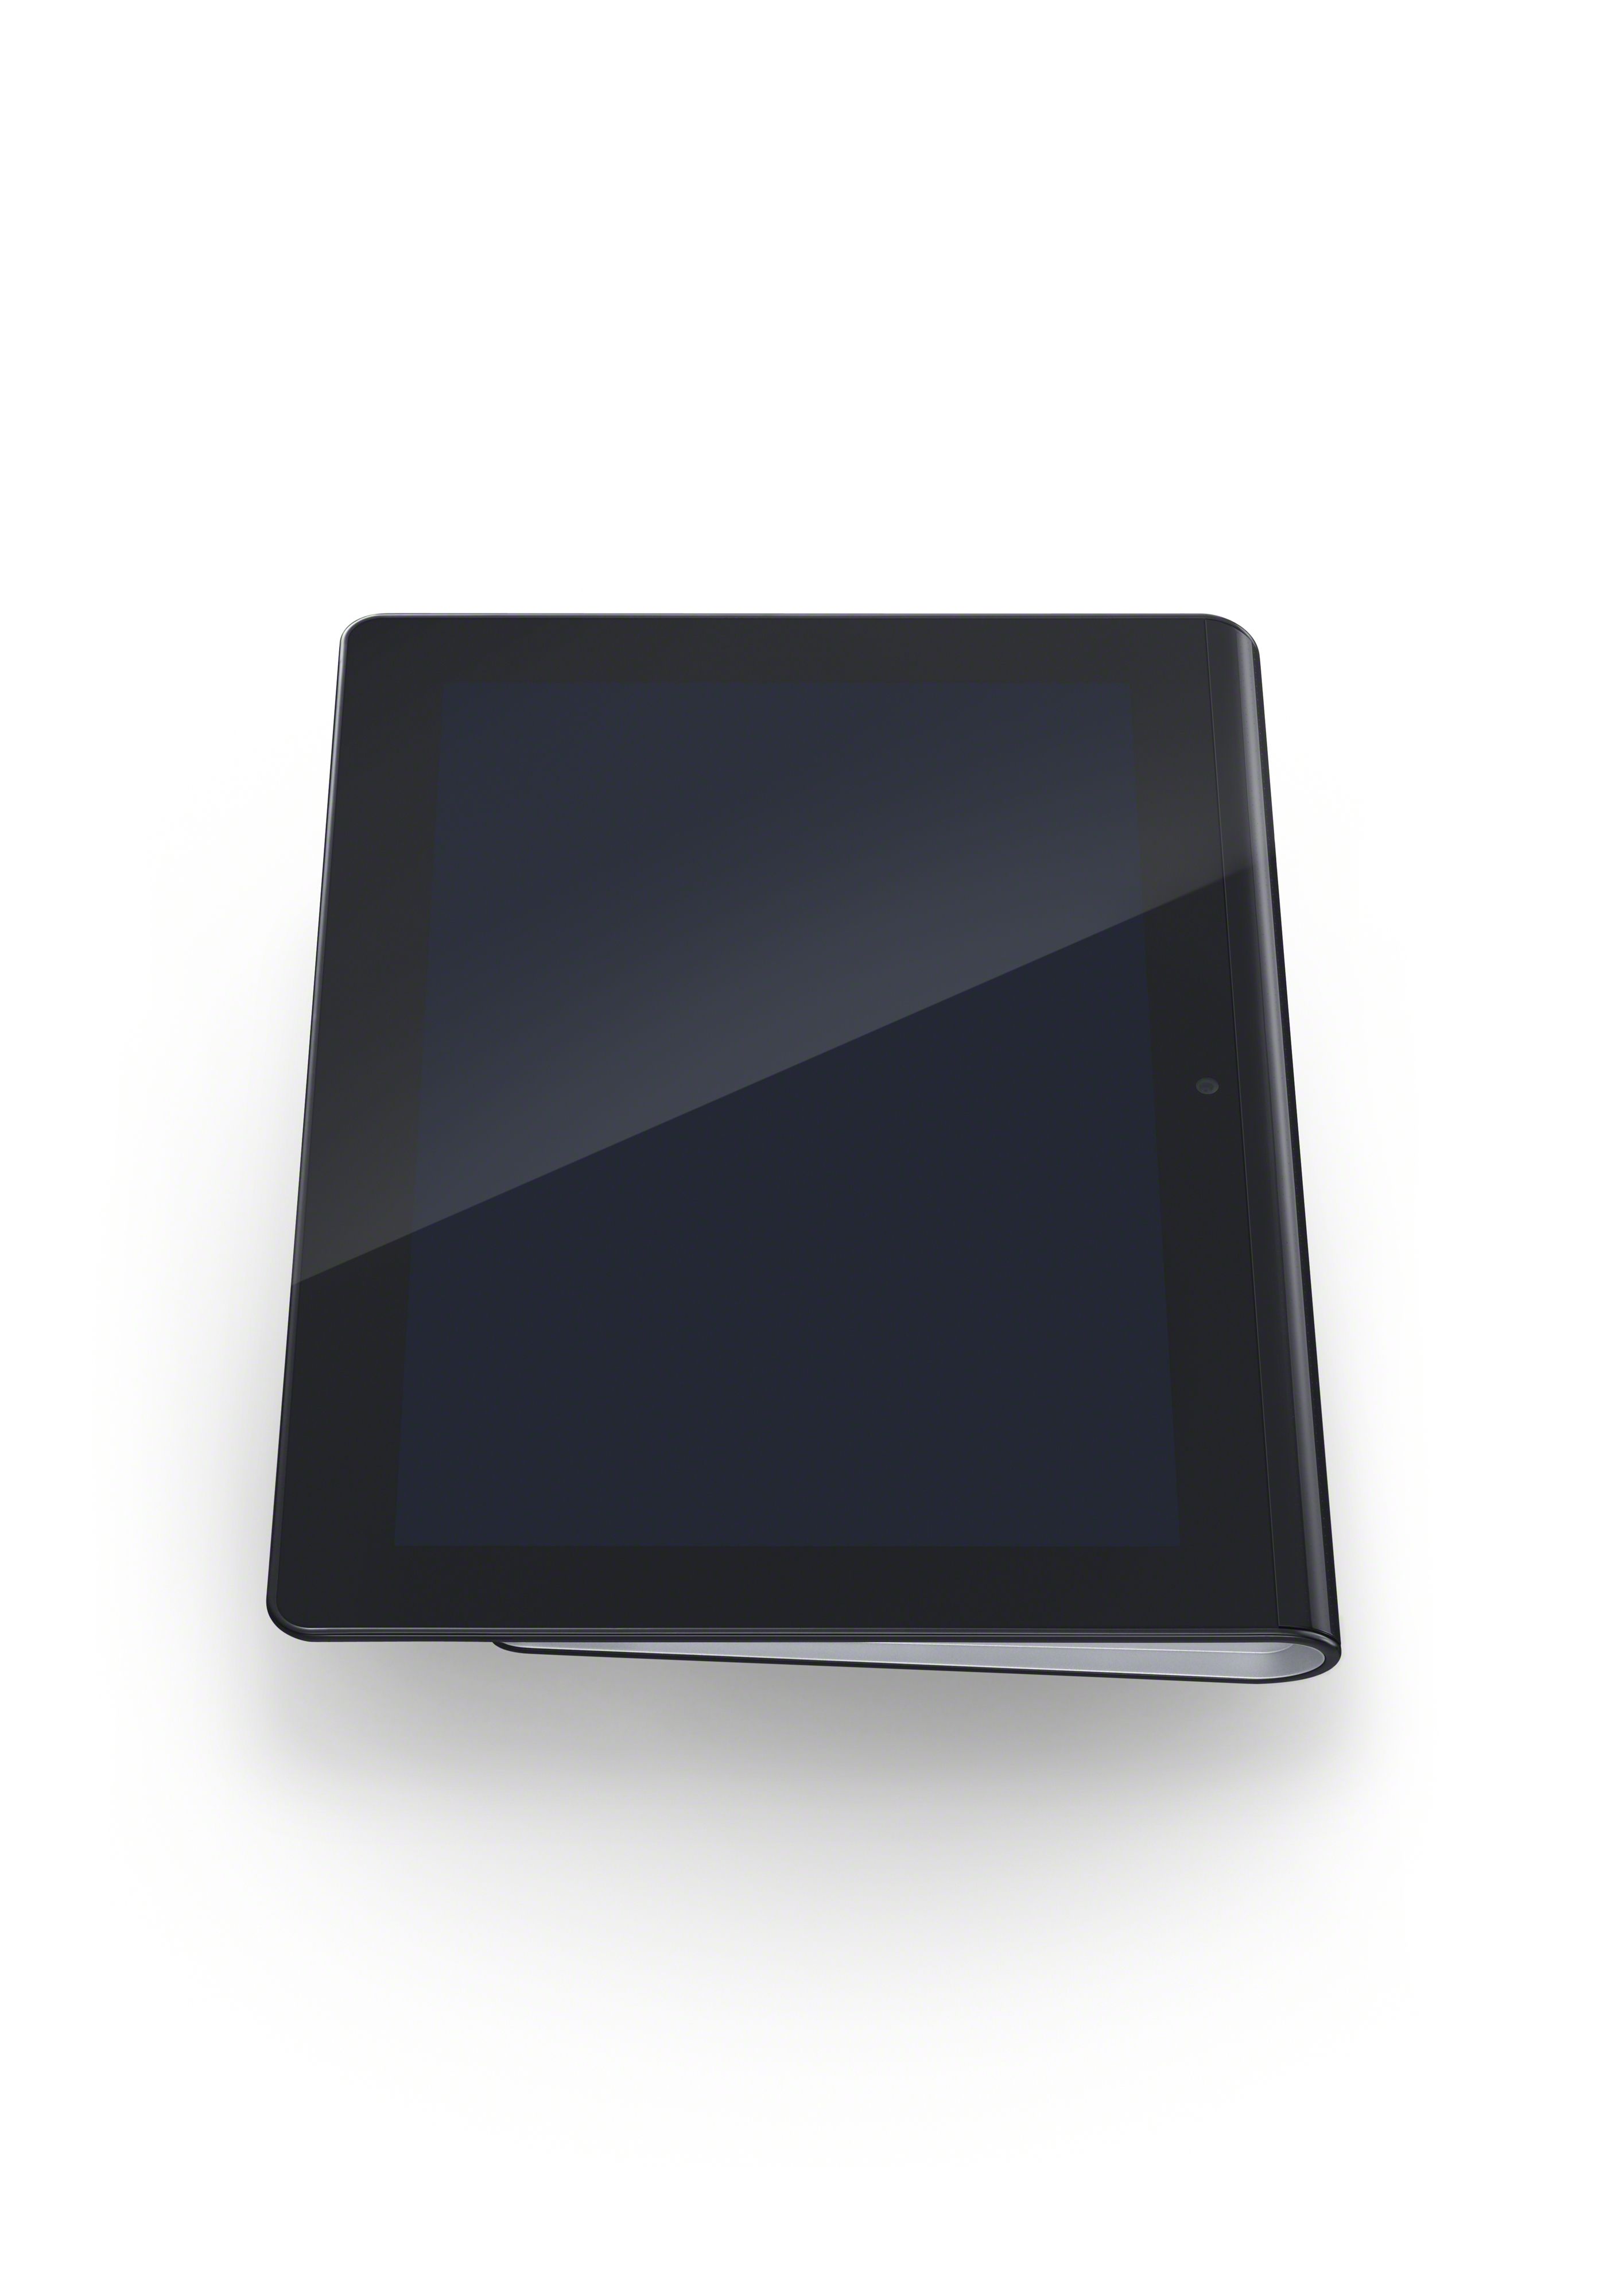 Sony Tablet平板电脑正式发布